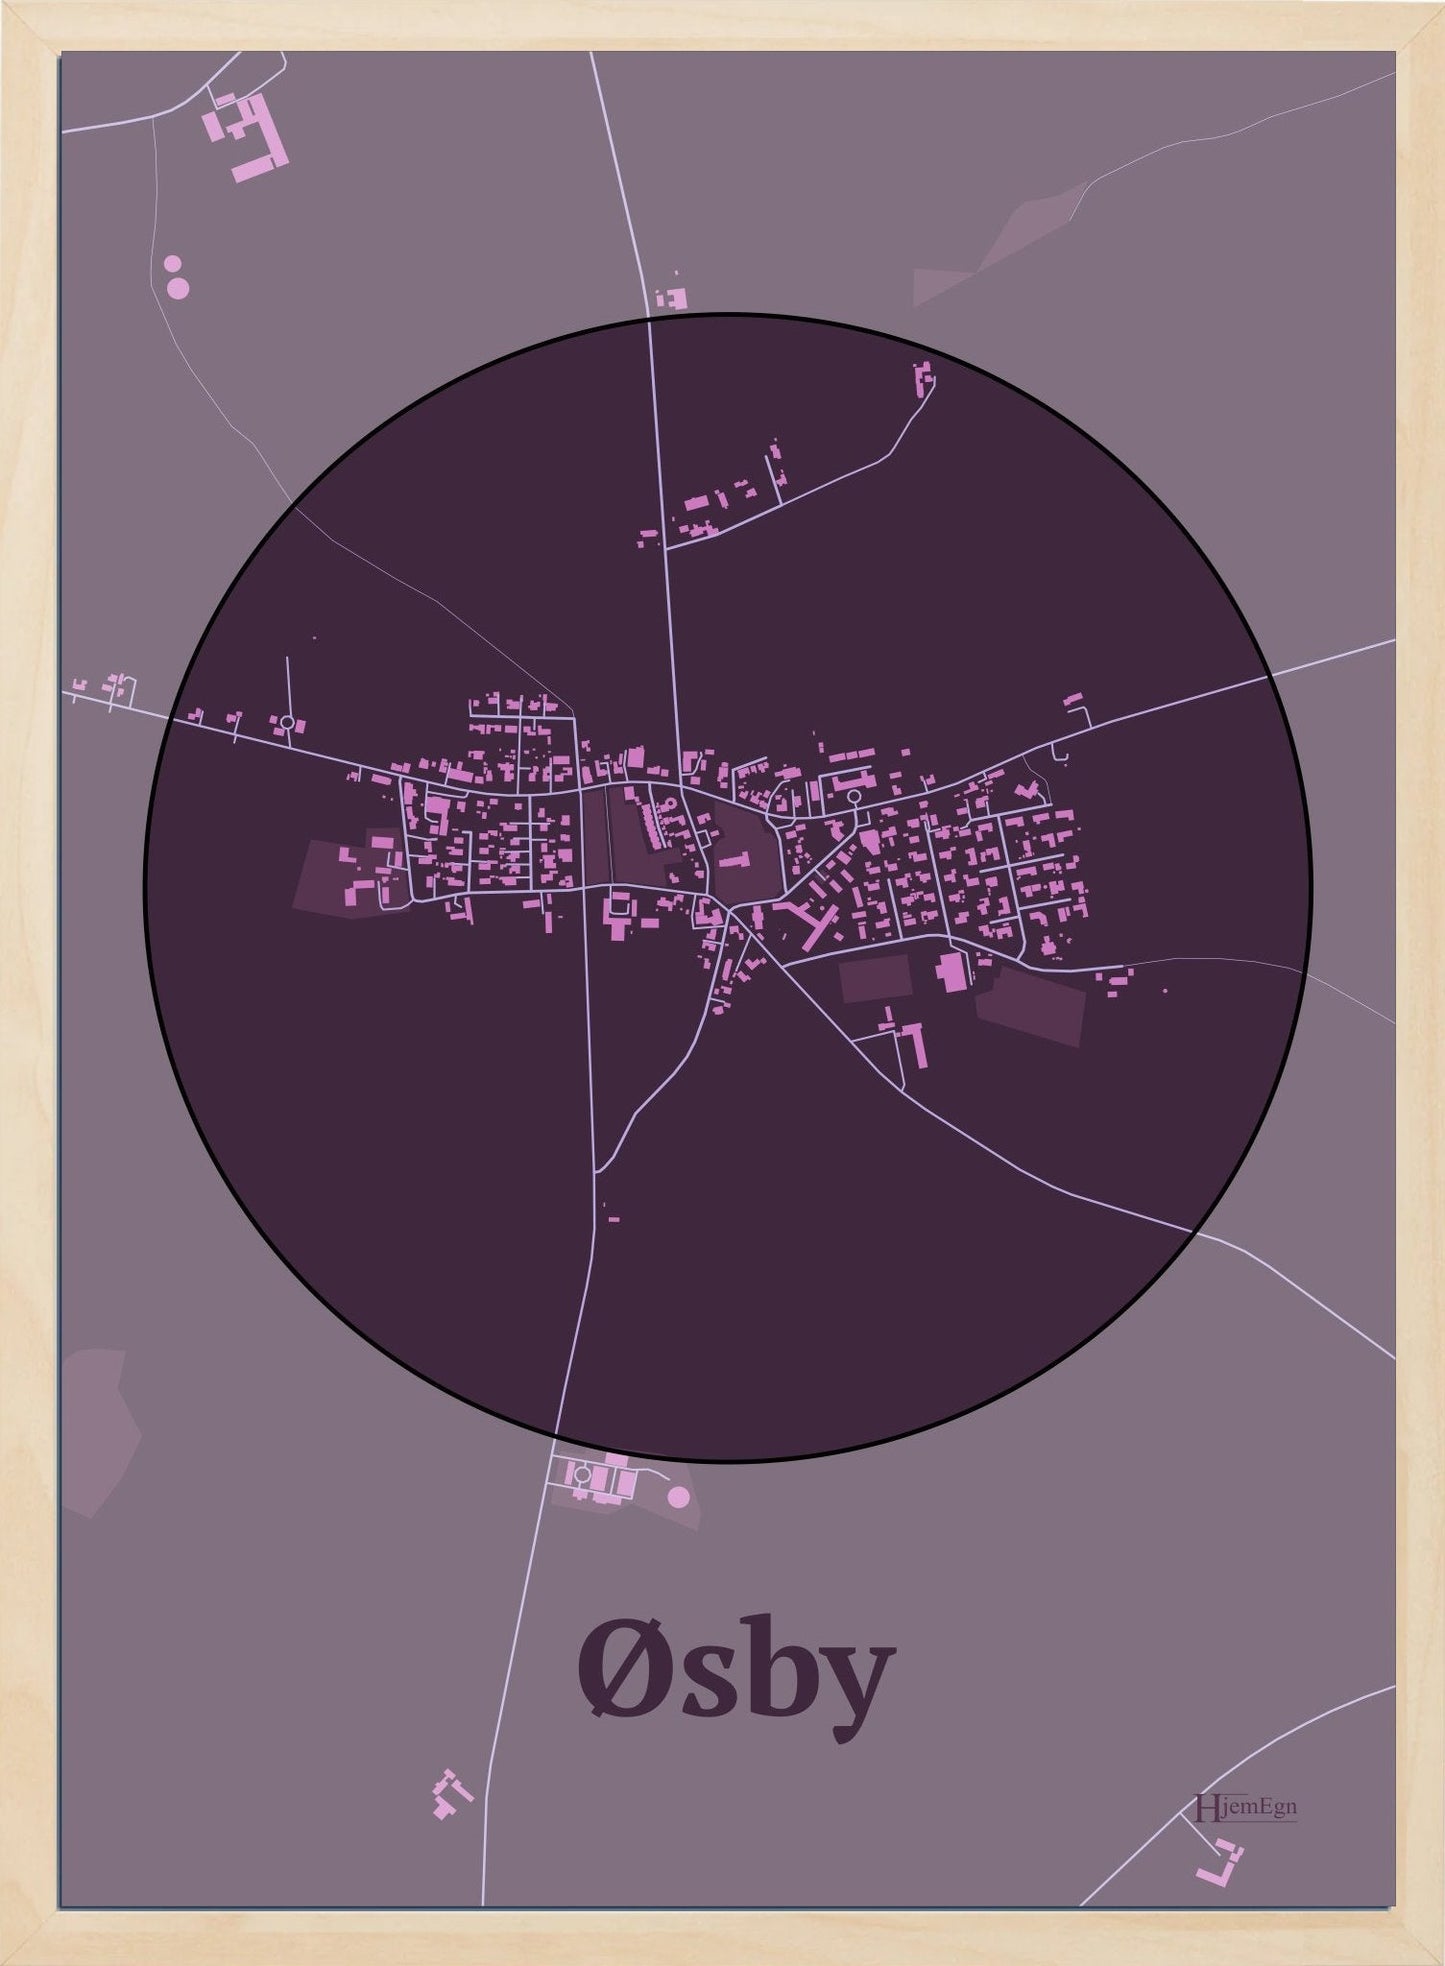 Øsby plakat i farve mørk rød og HjemEgn.dk design centrum. Design bykort for Øsby